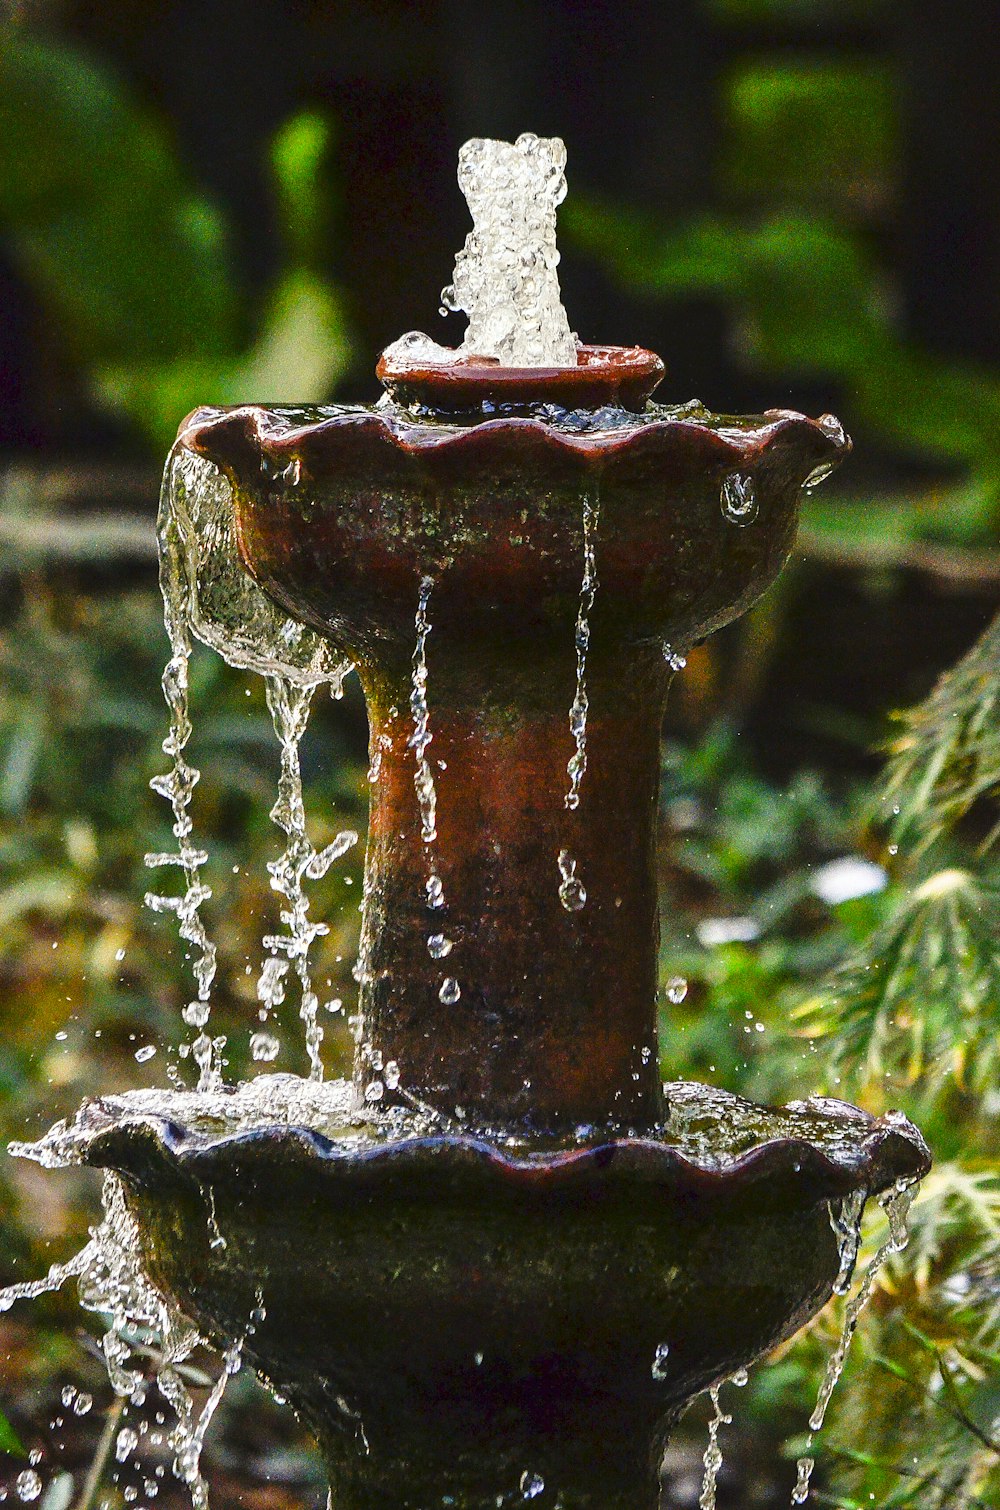 brown water fountain in tilt shift lens